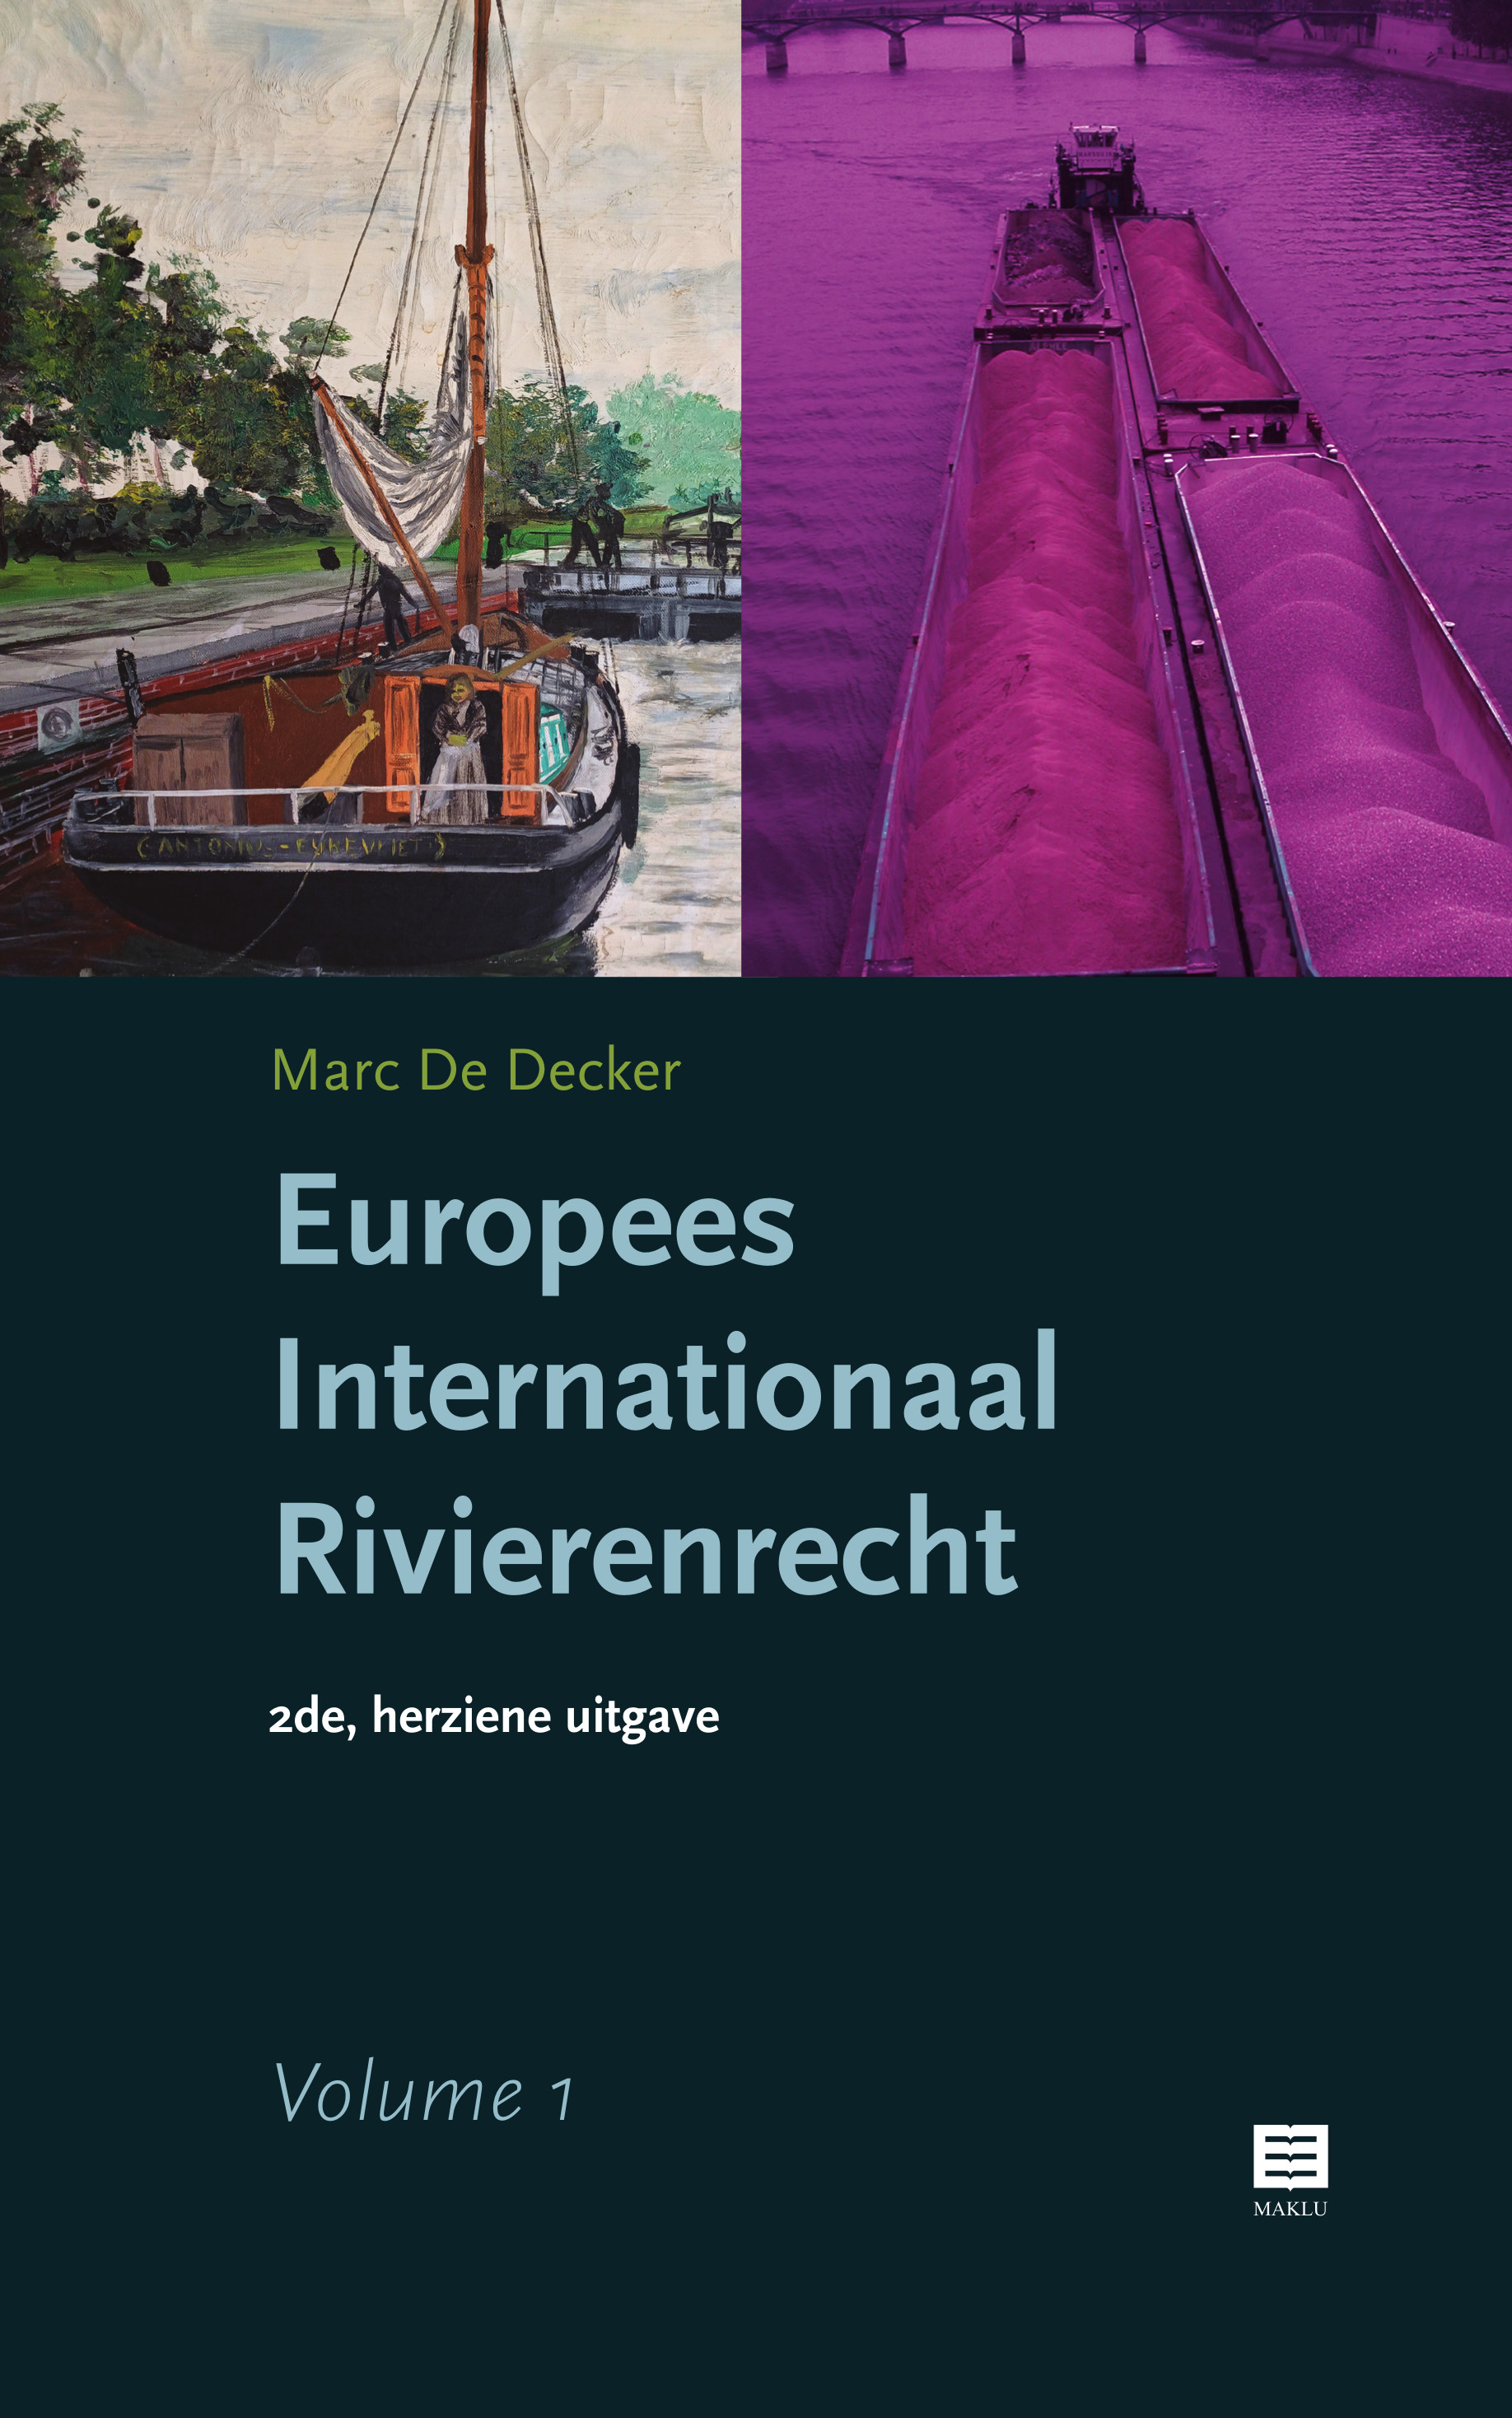 Europees Internationaal Rivierenrecht | 2 Volumes